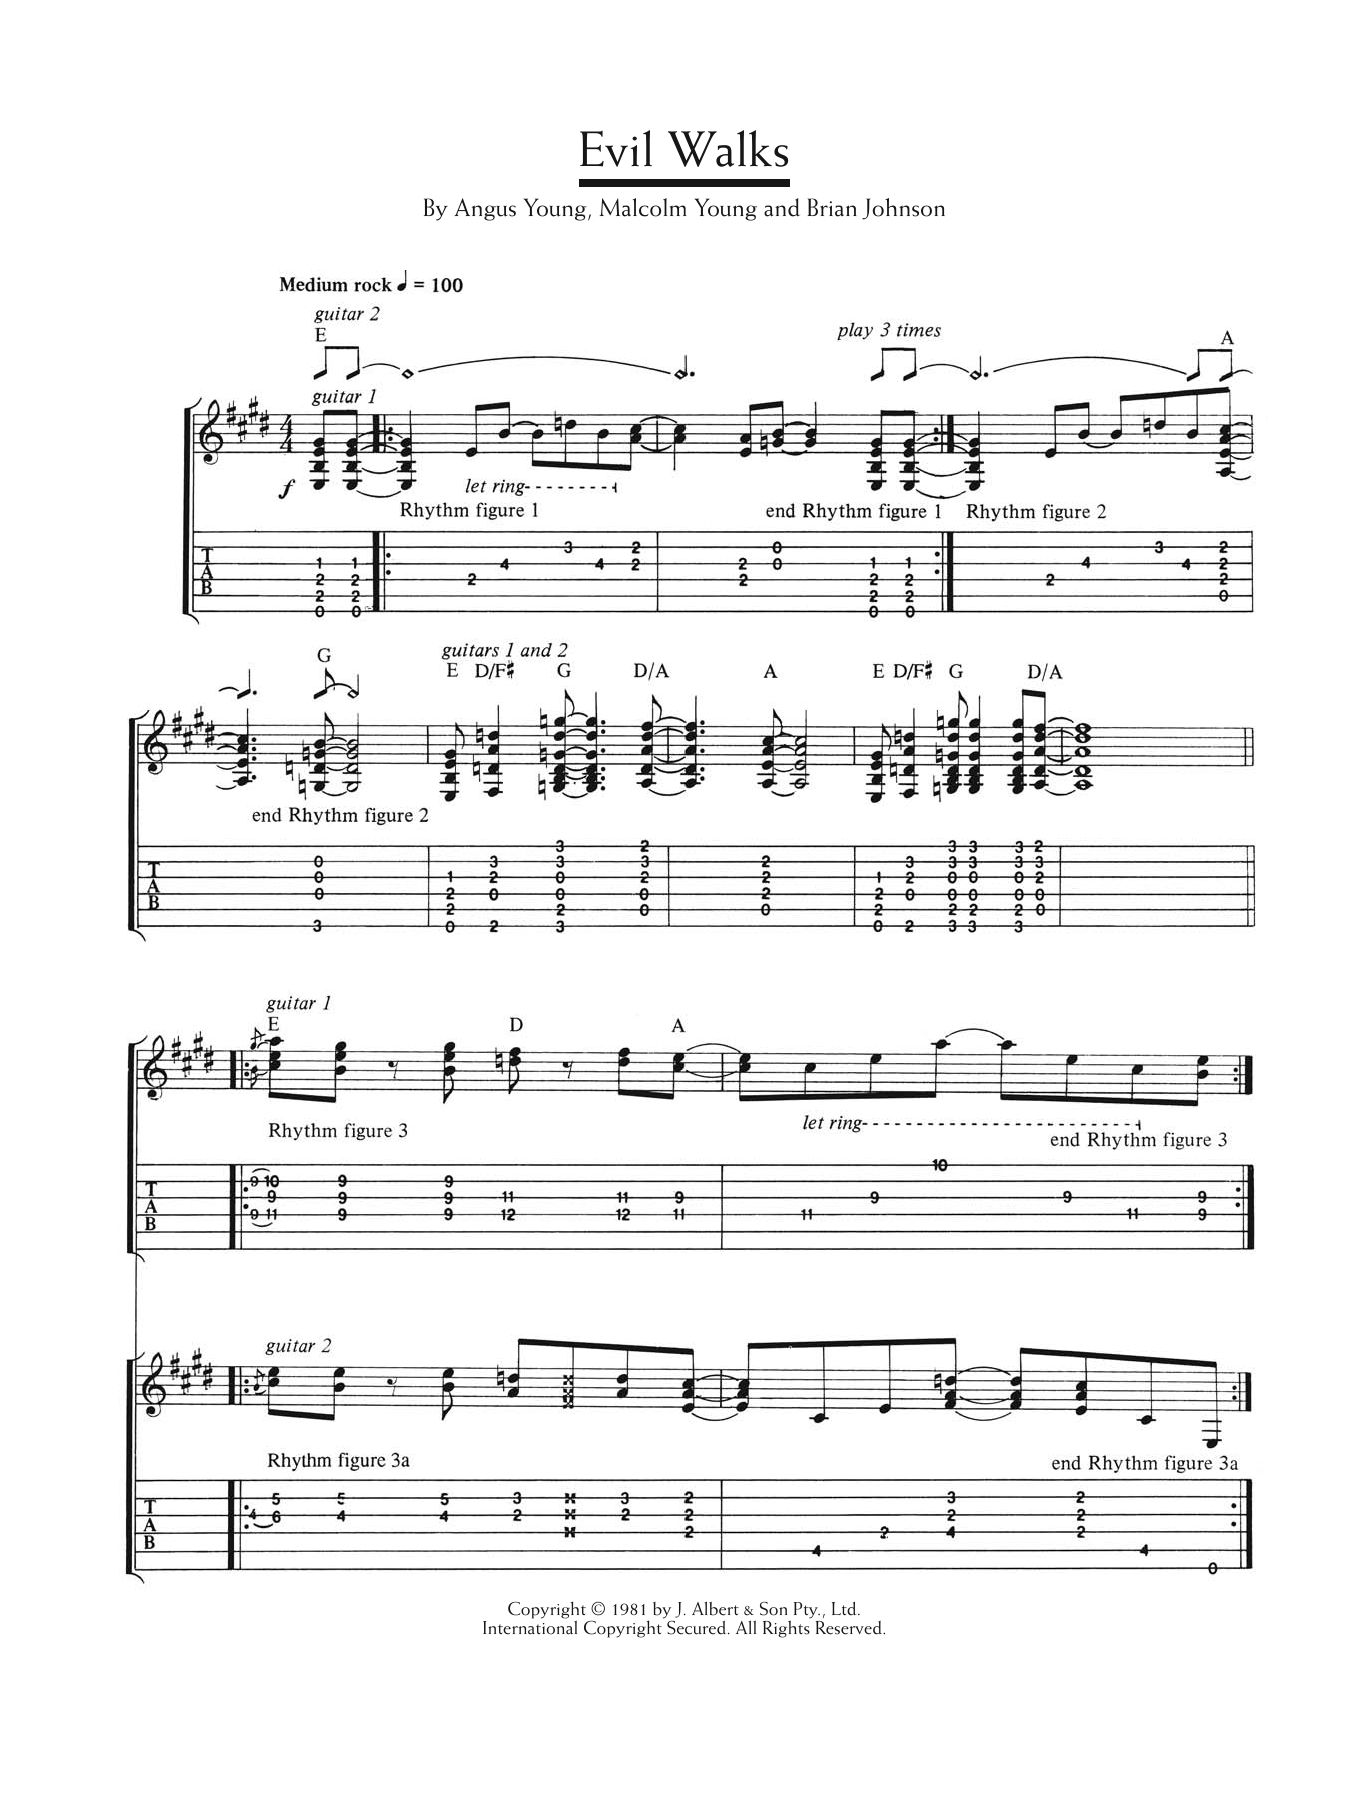 AC/DC Evil Walks Sheet Music Notes & Chords for Guitar Tab - Download or Print PDF